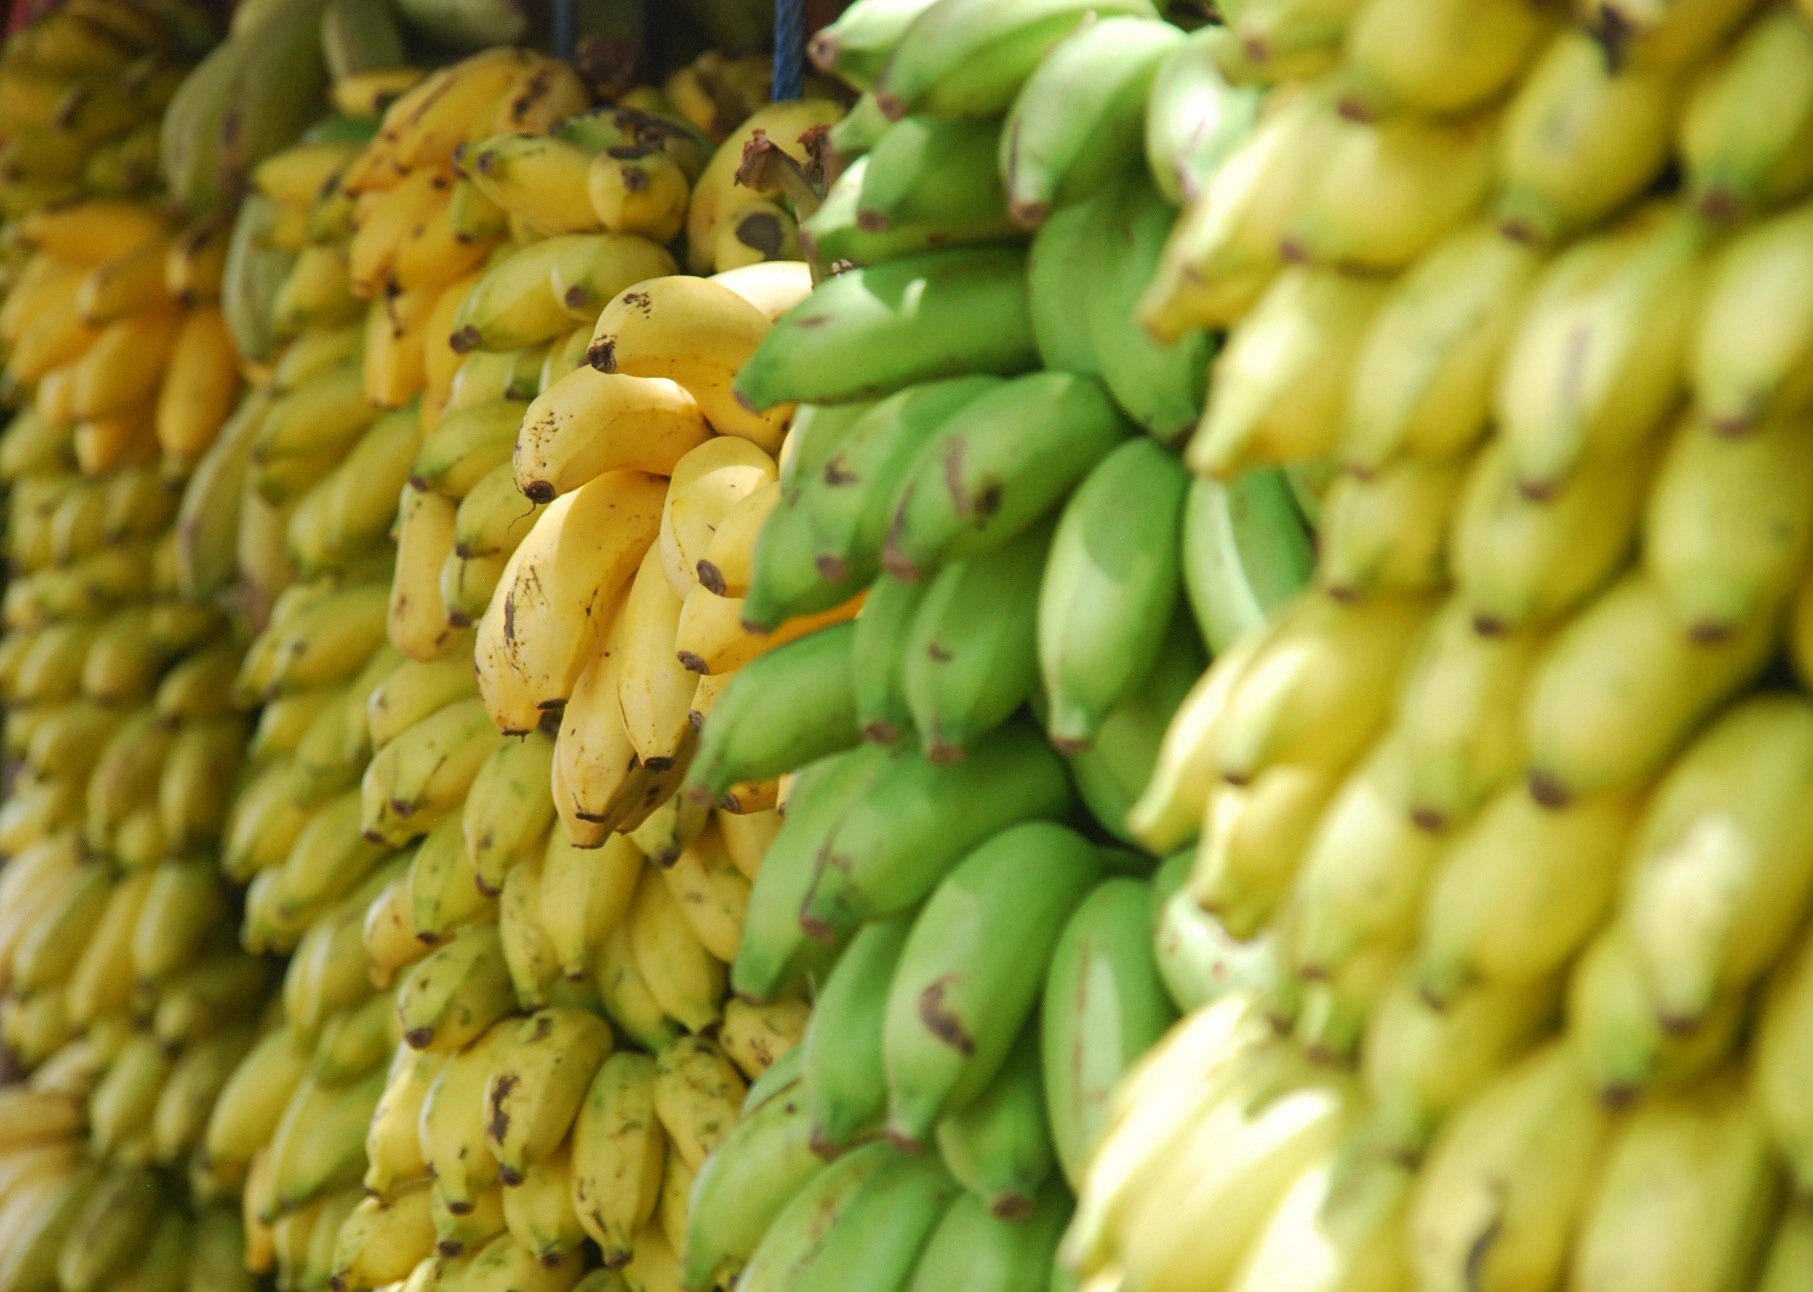 Rows of stacked bananas